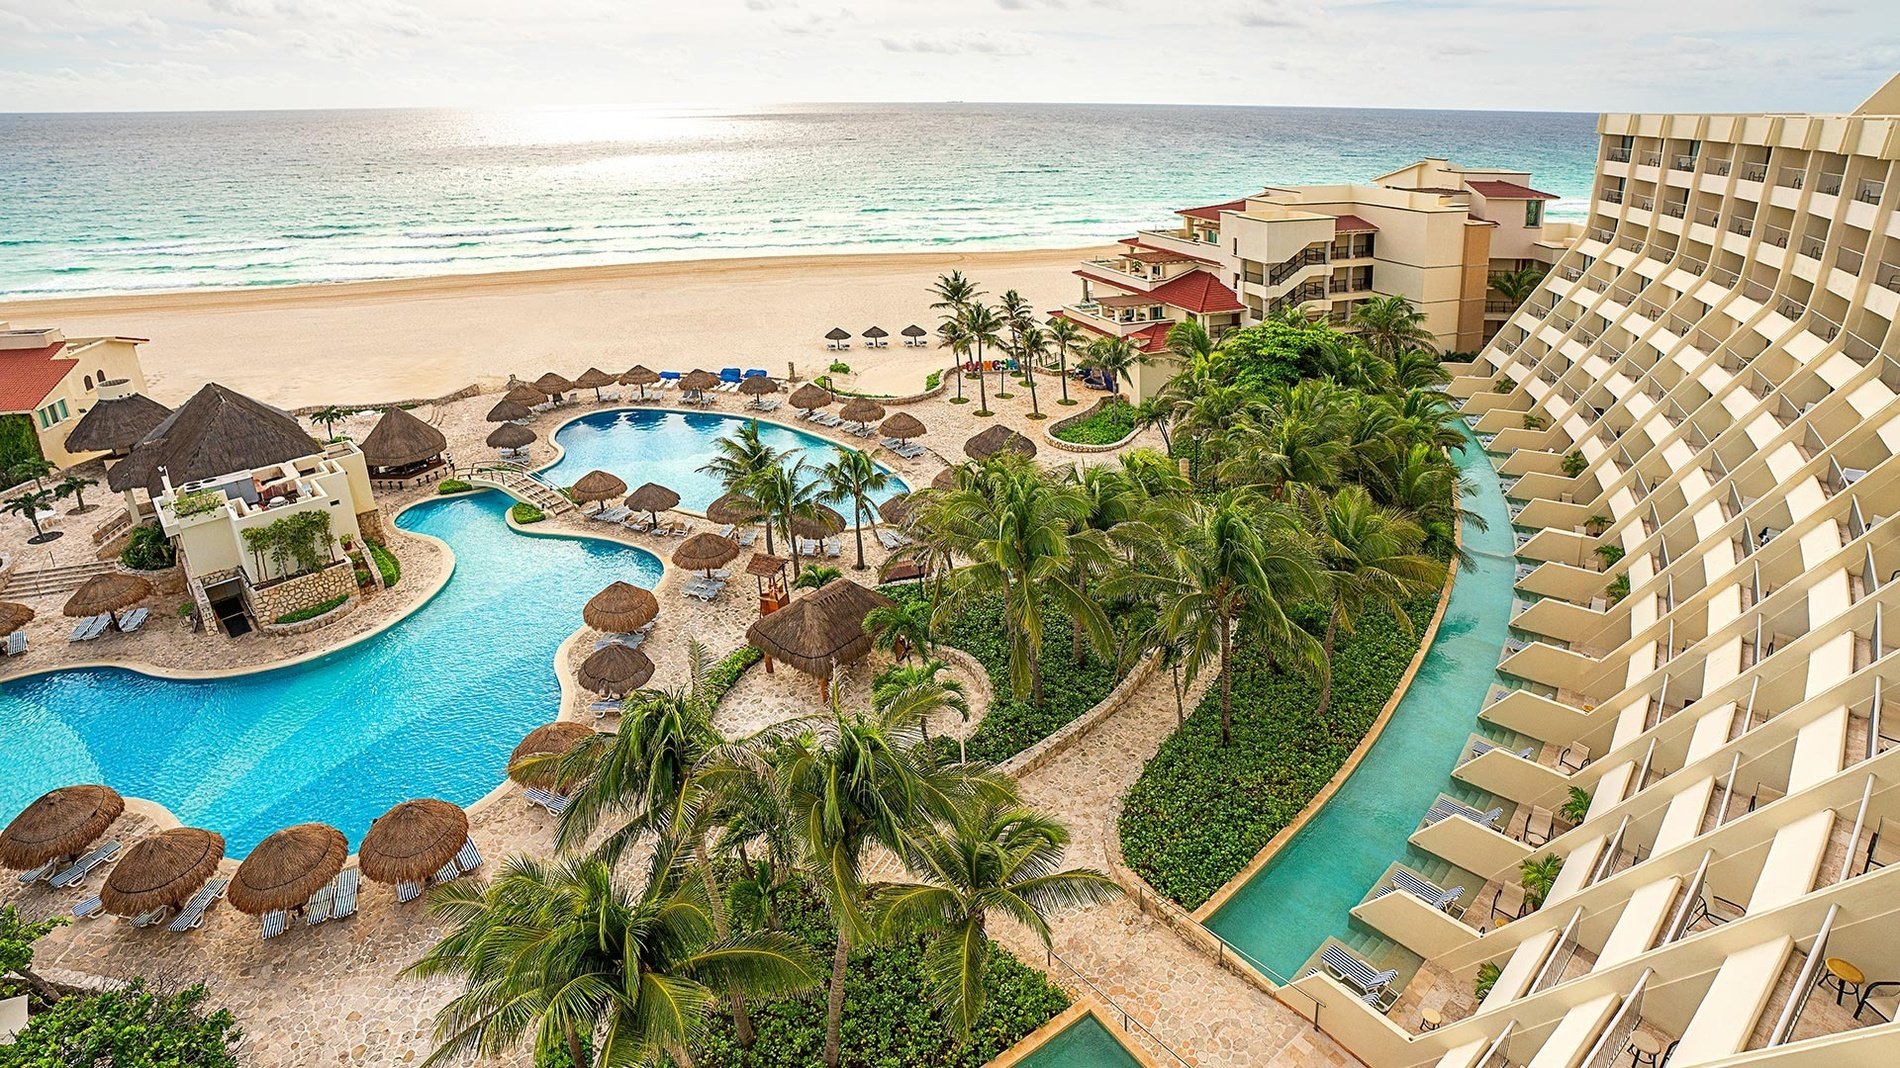 Panorámica del Hotel Grand Park Royal Cancún con el logo de Premio TripAdvisor traveler´s choice 2021